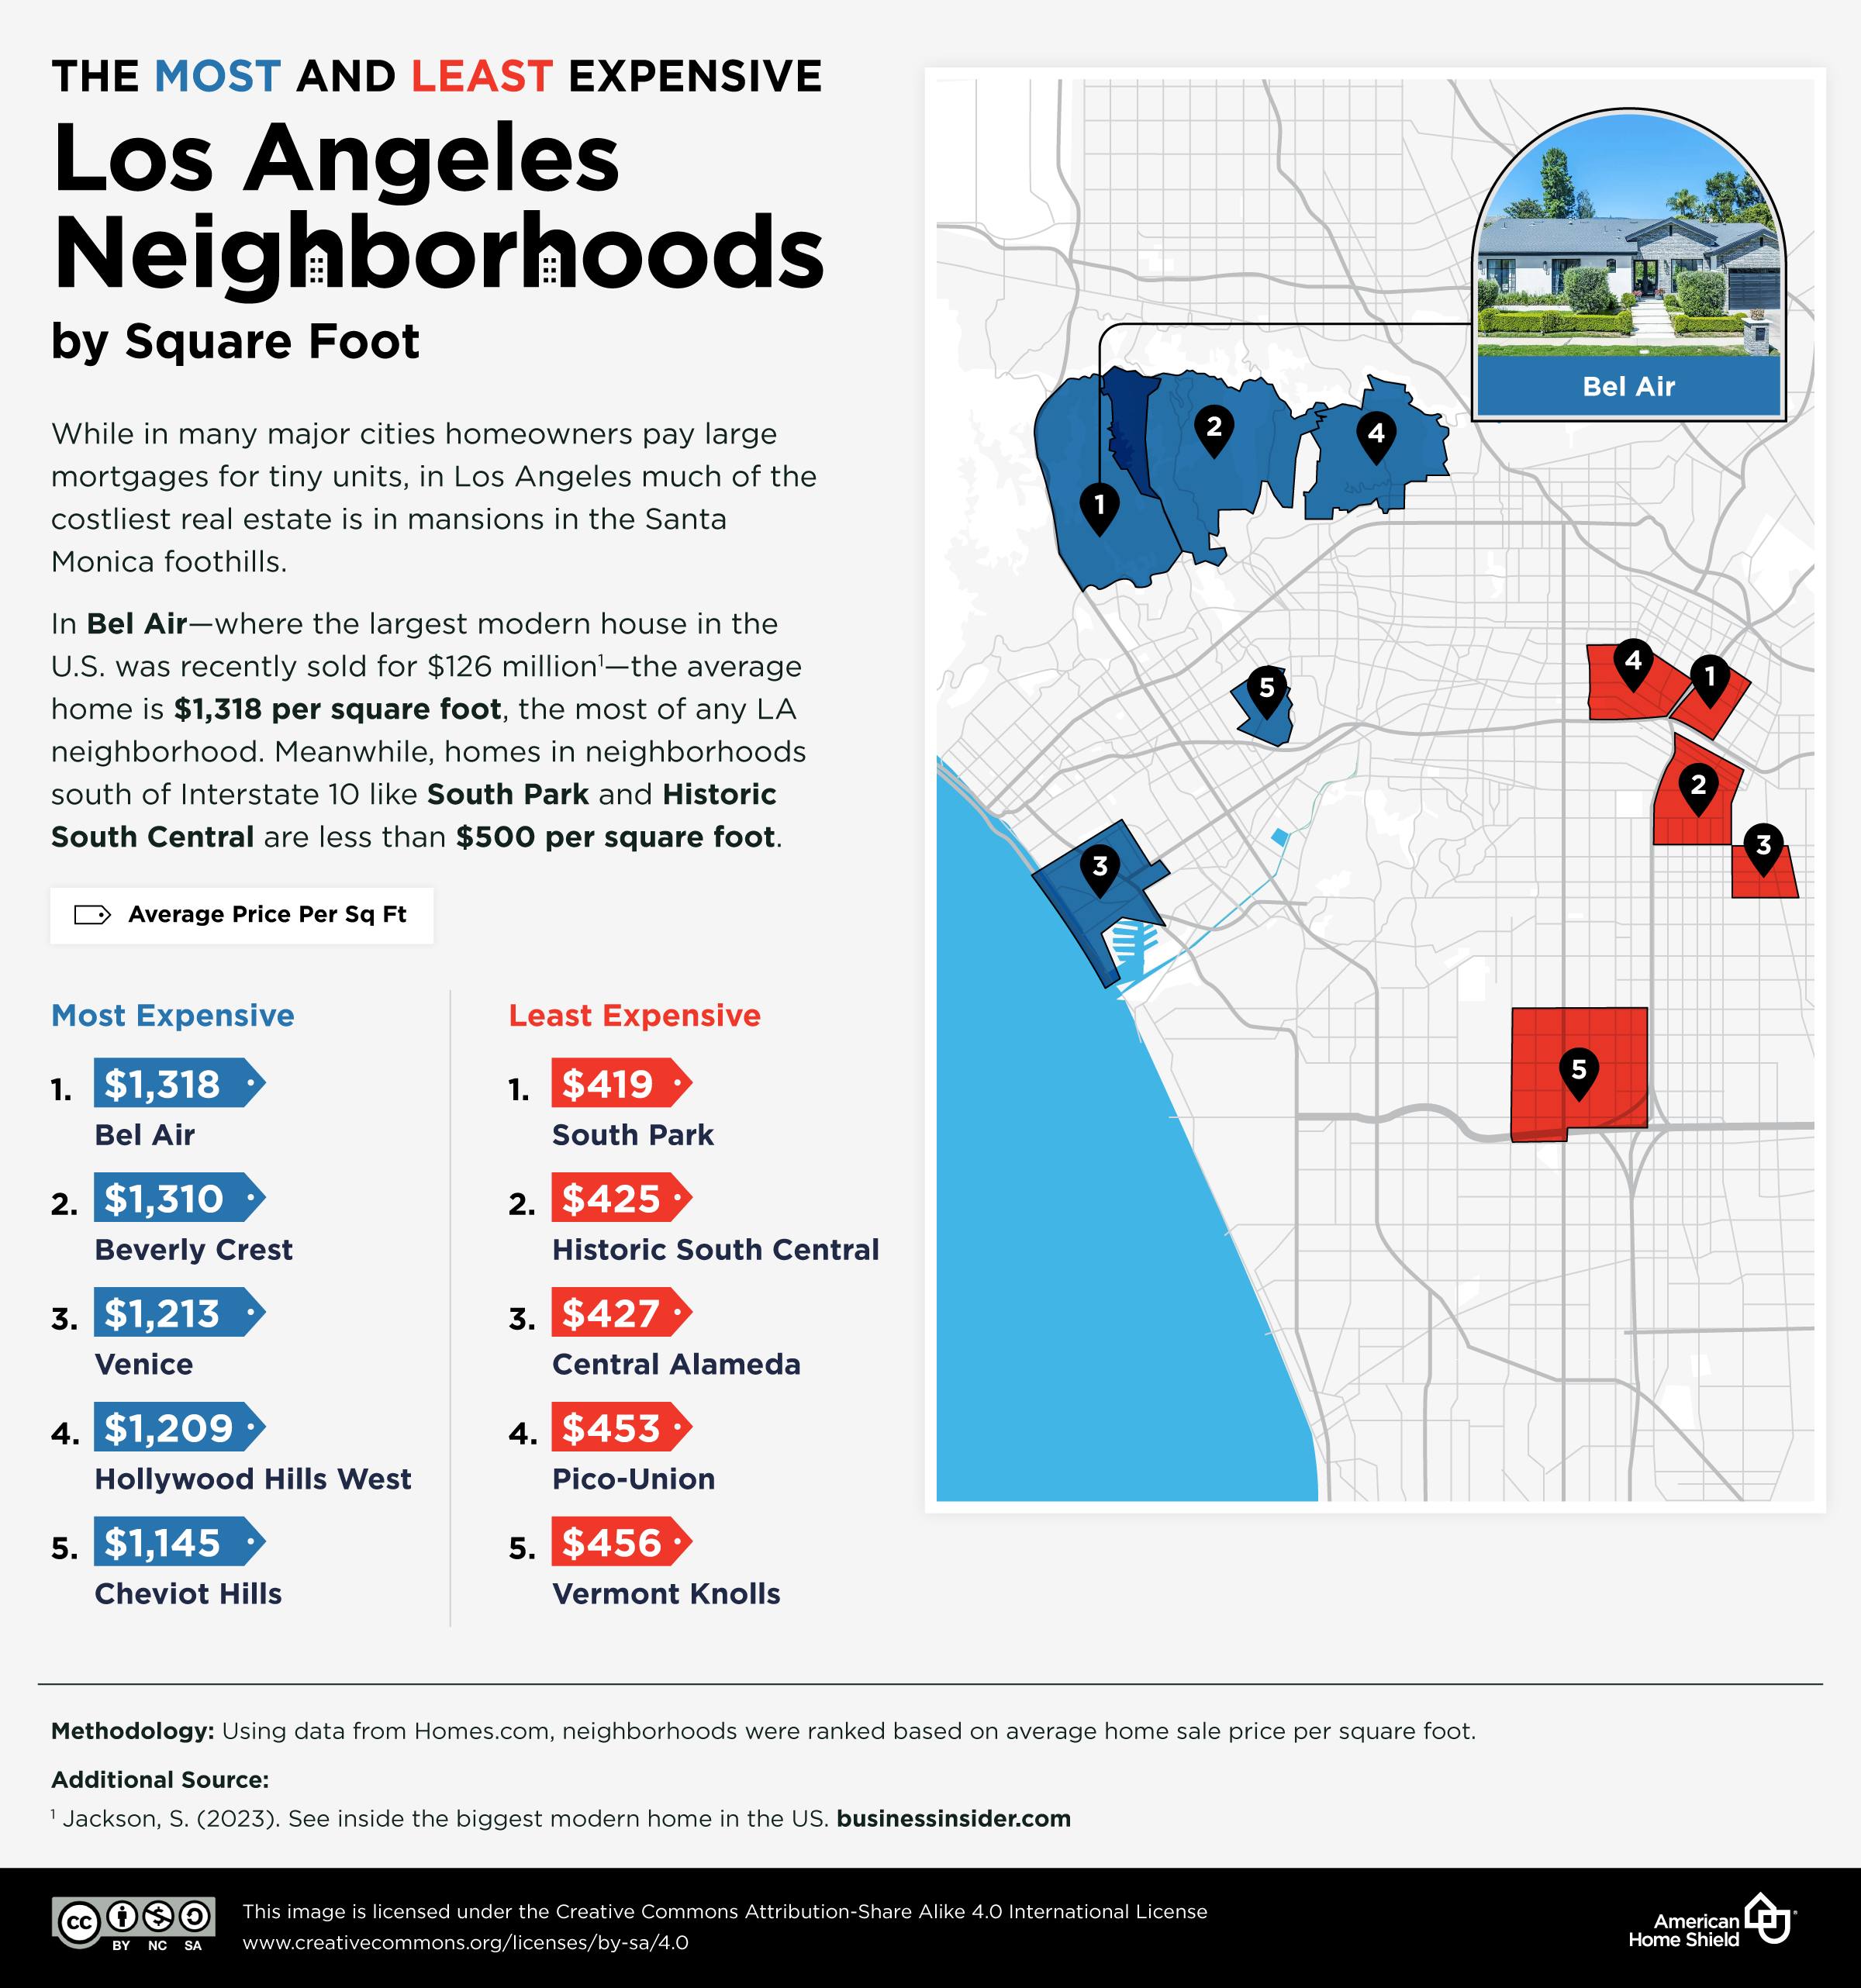 Most-least expensive LA neighborhoods per sq ft.